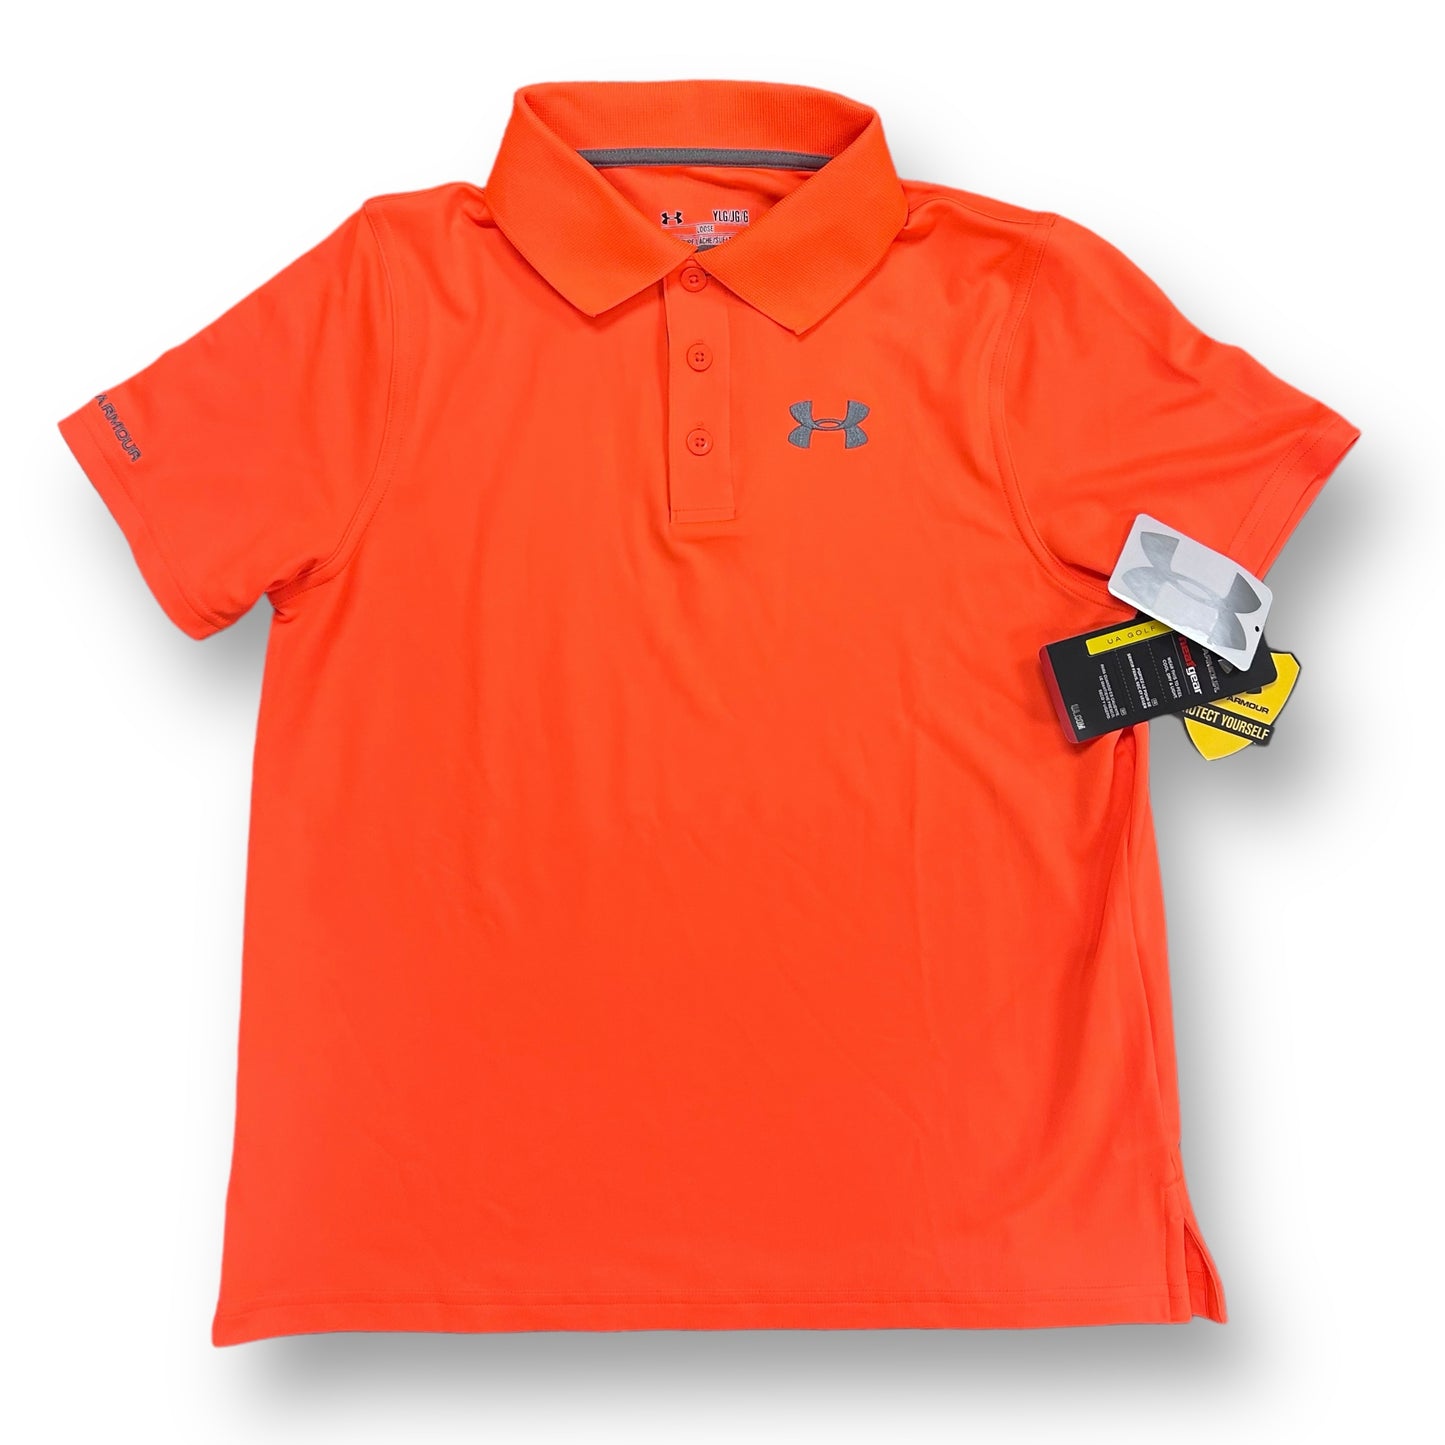 NEW! Boys Under Armour Size YLG 12/14 Bright Orange Short Sleeve Polo Shirt